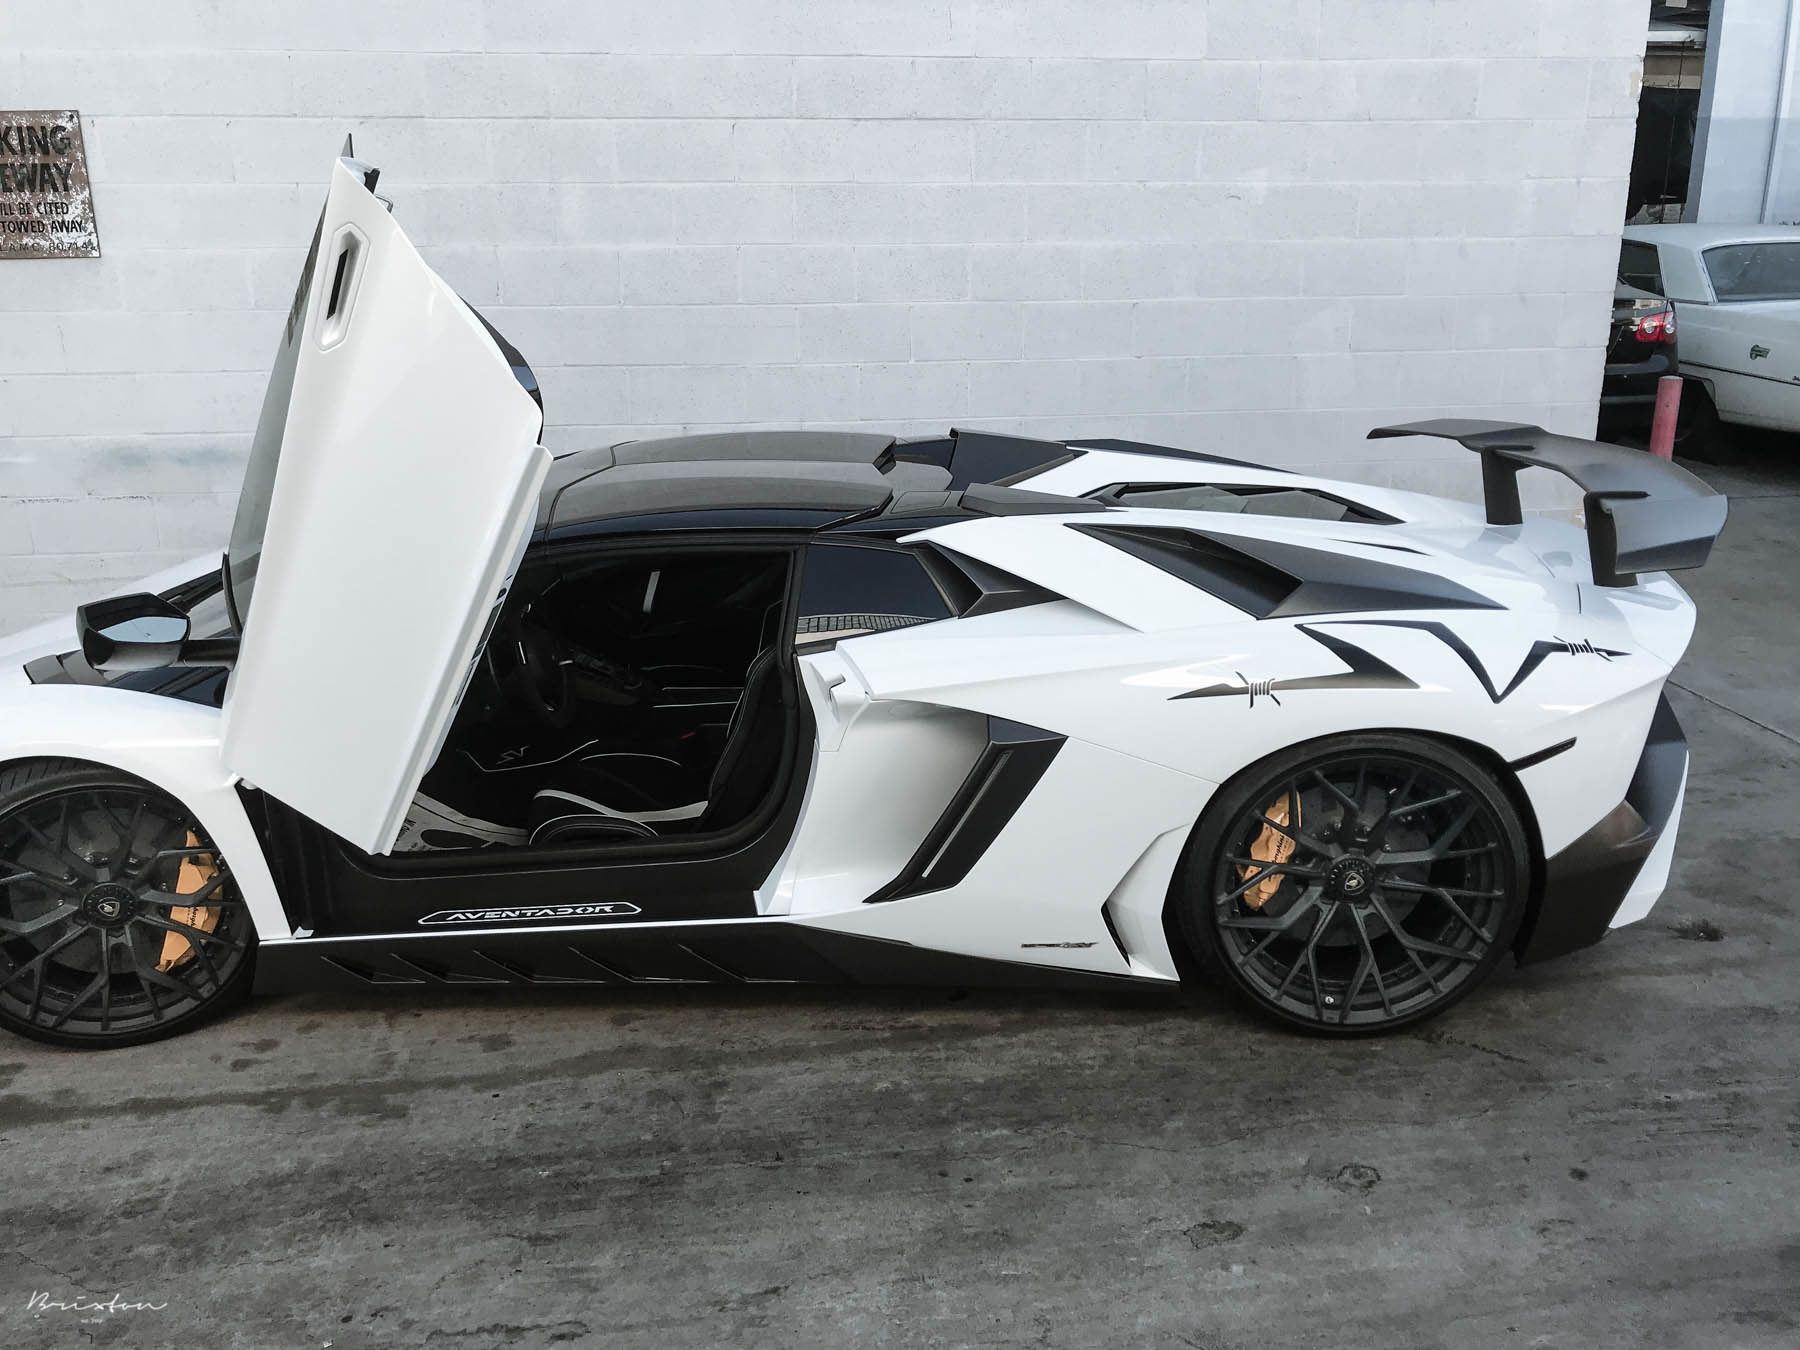 Post Malone's black and white custom built Lamborghini Aventador